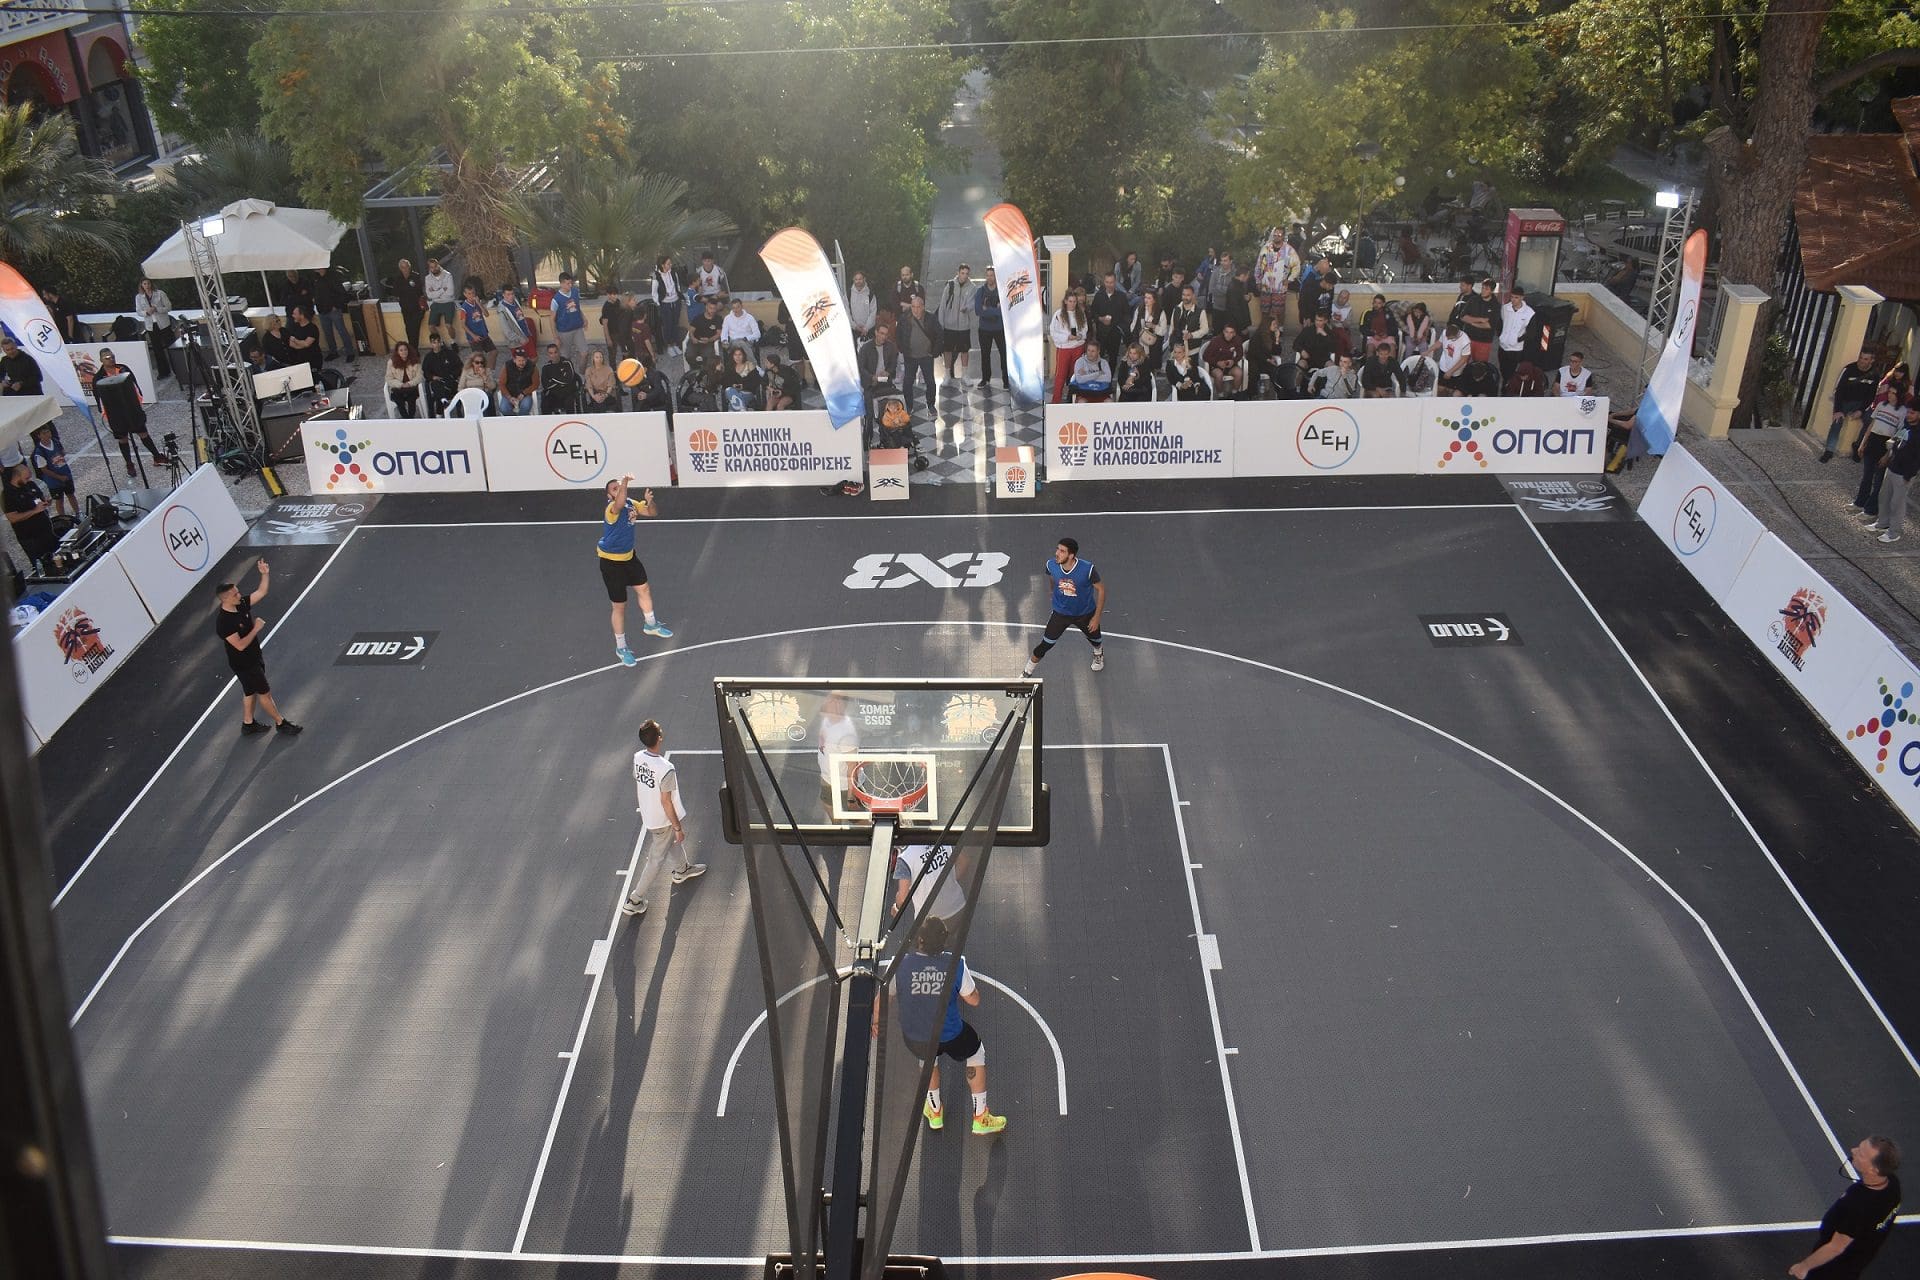 Eordaialive.com - Τα Νέα της Πτολεμαΐδας, Εορδαίας, Κοζάνης Οι παρέες έγιναν ομάδες στο 3x3 ΔΕΗ Street Basketball στη Σάμο